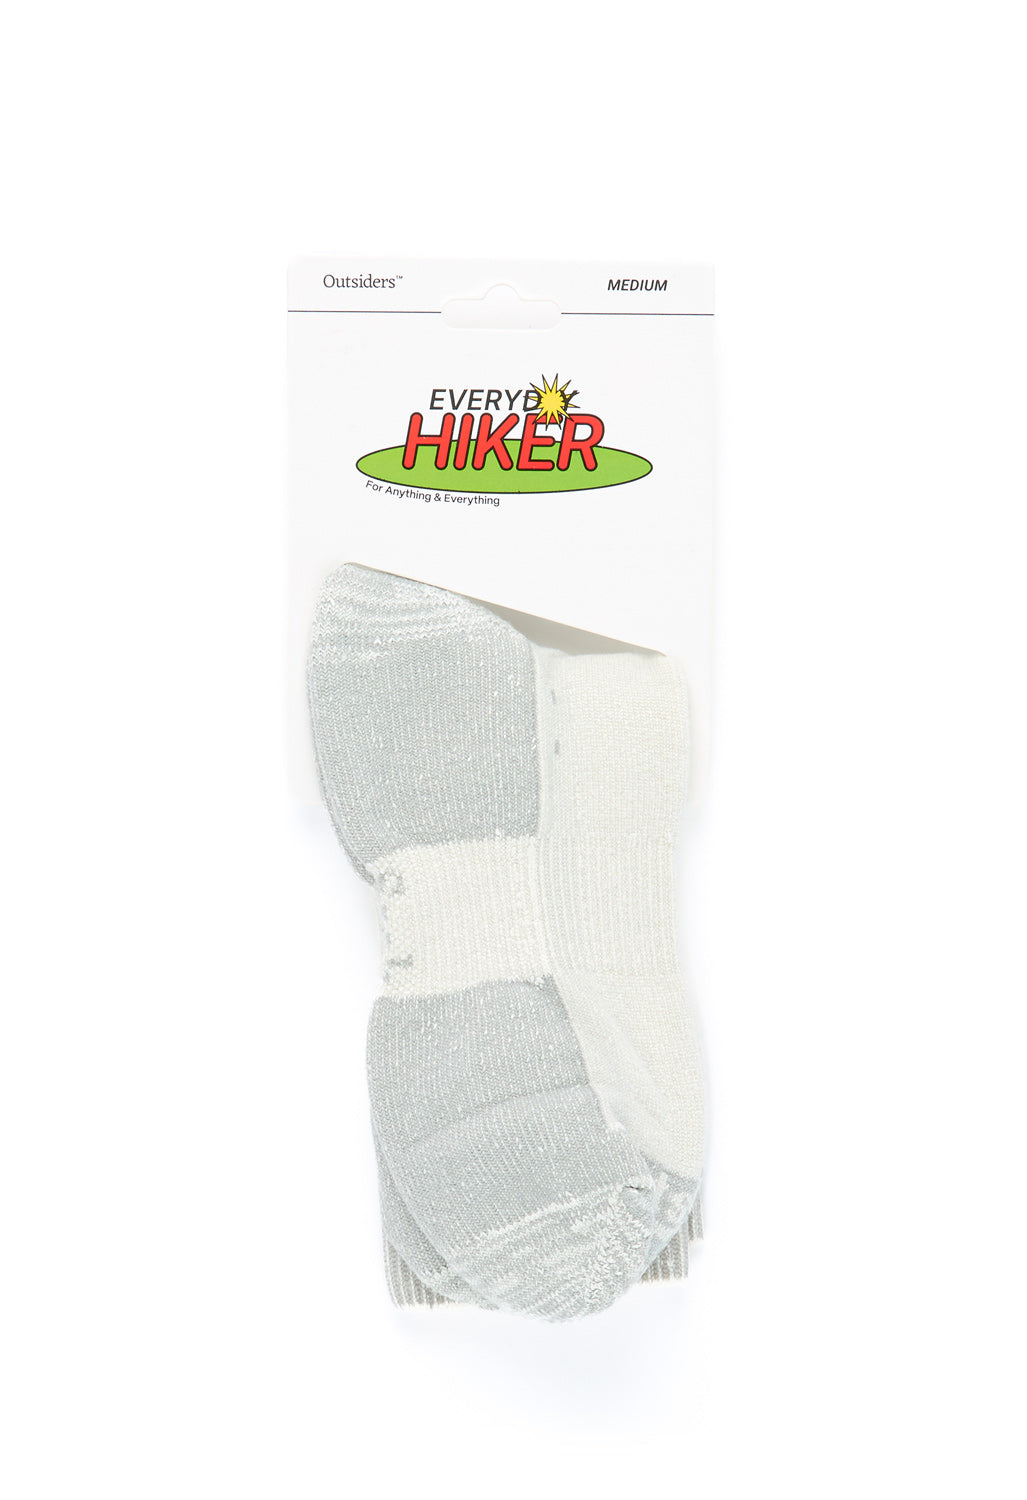 Outsiders Everyday Hiker Socks - Grey